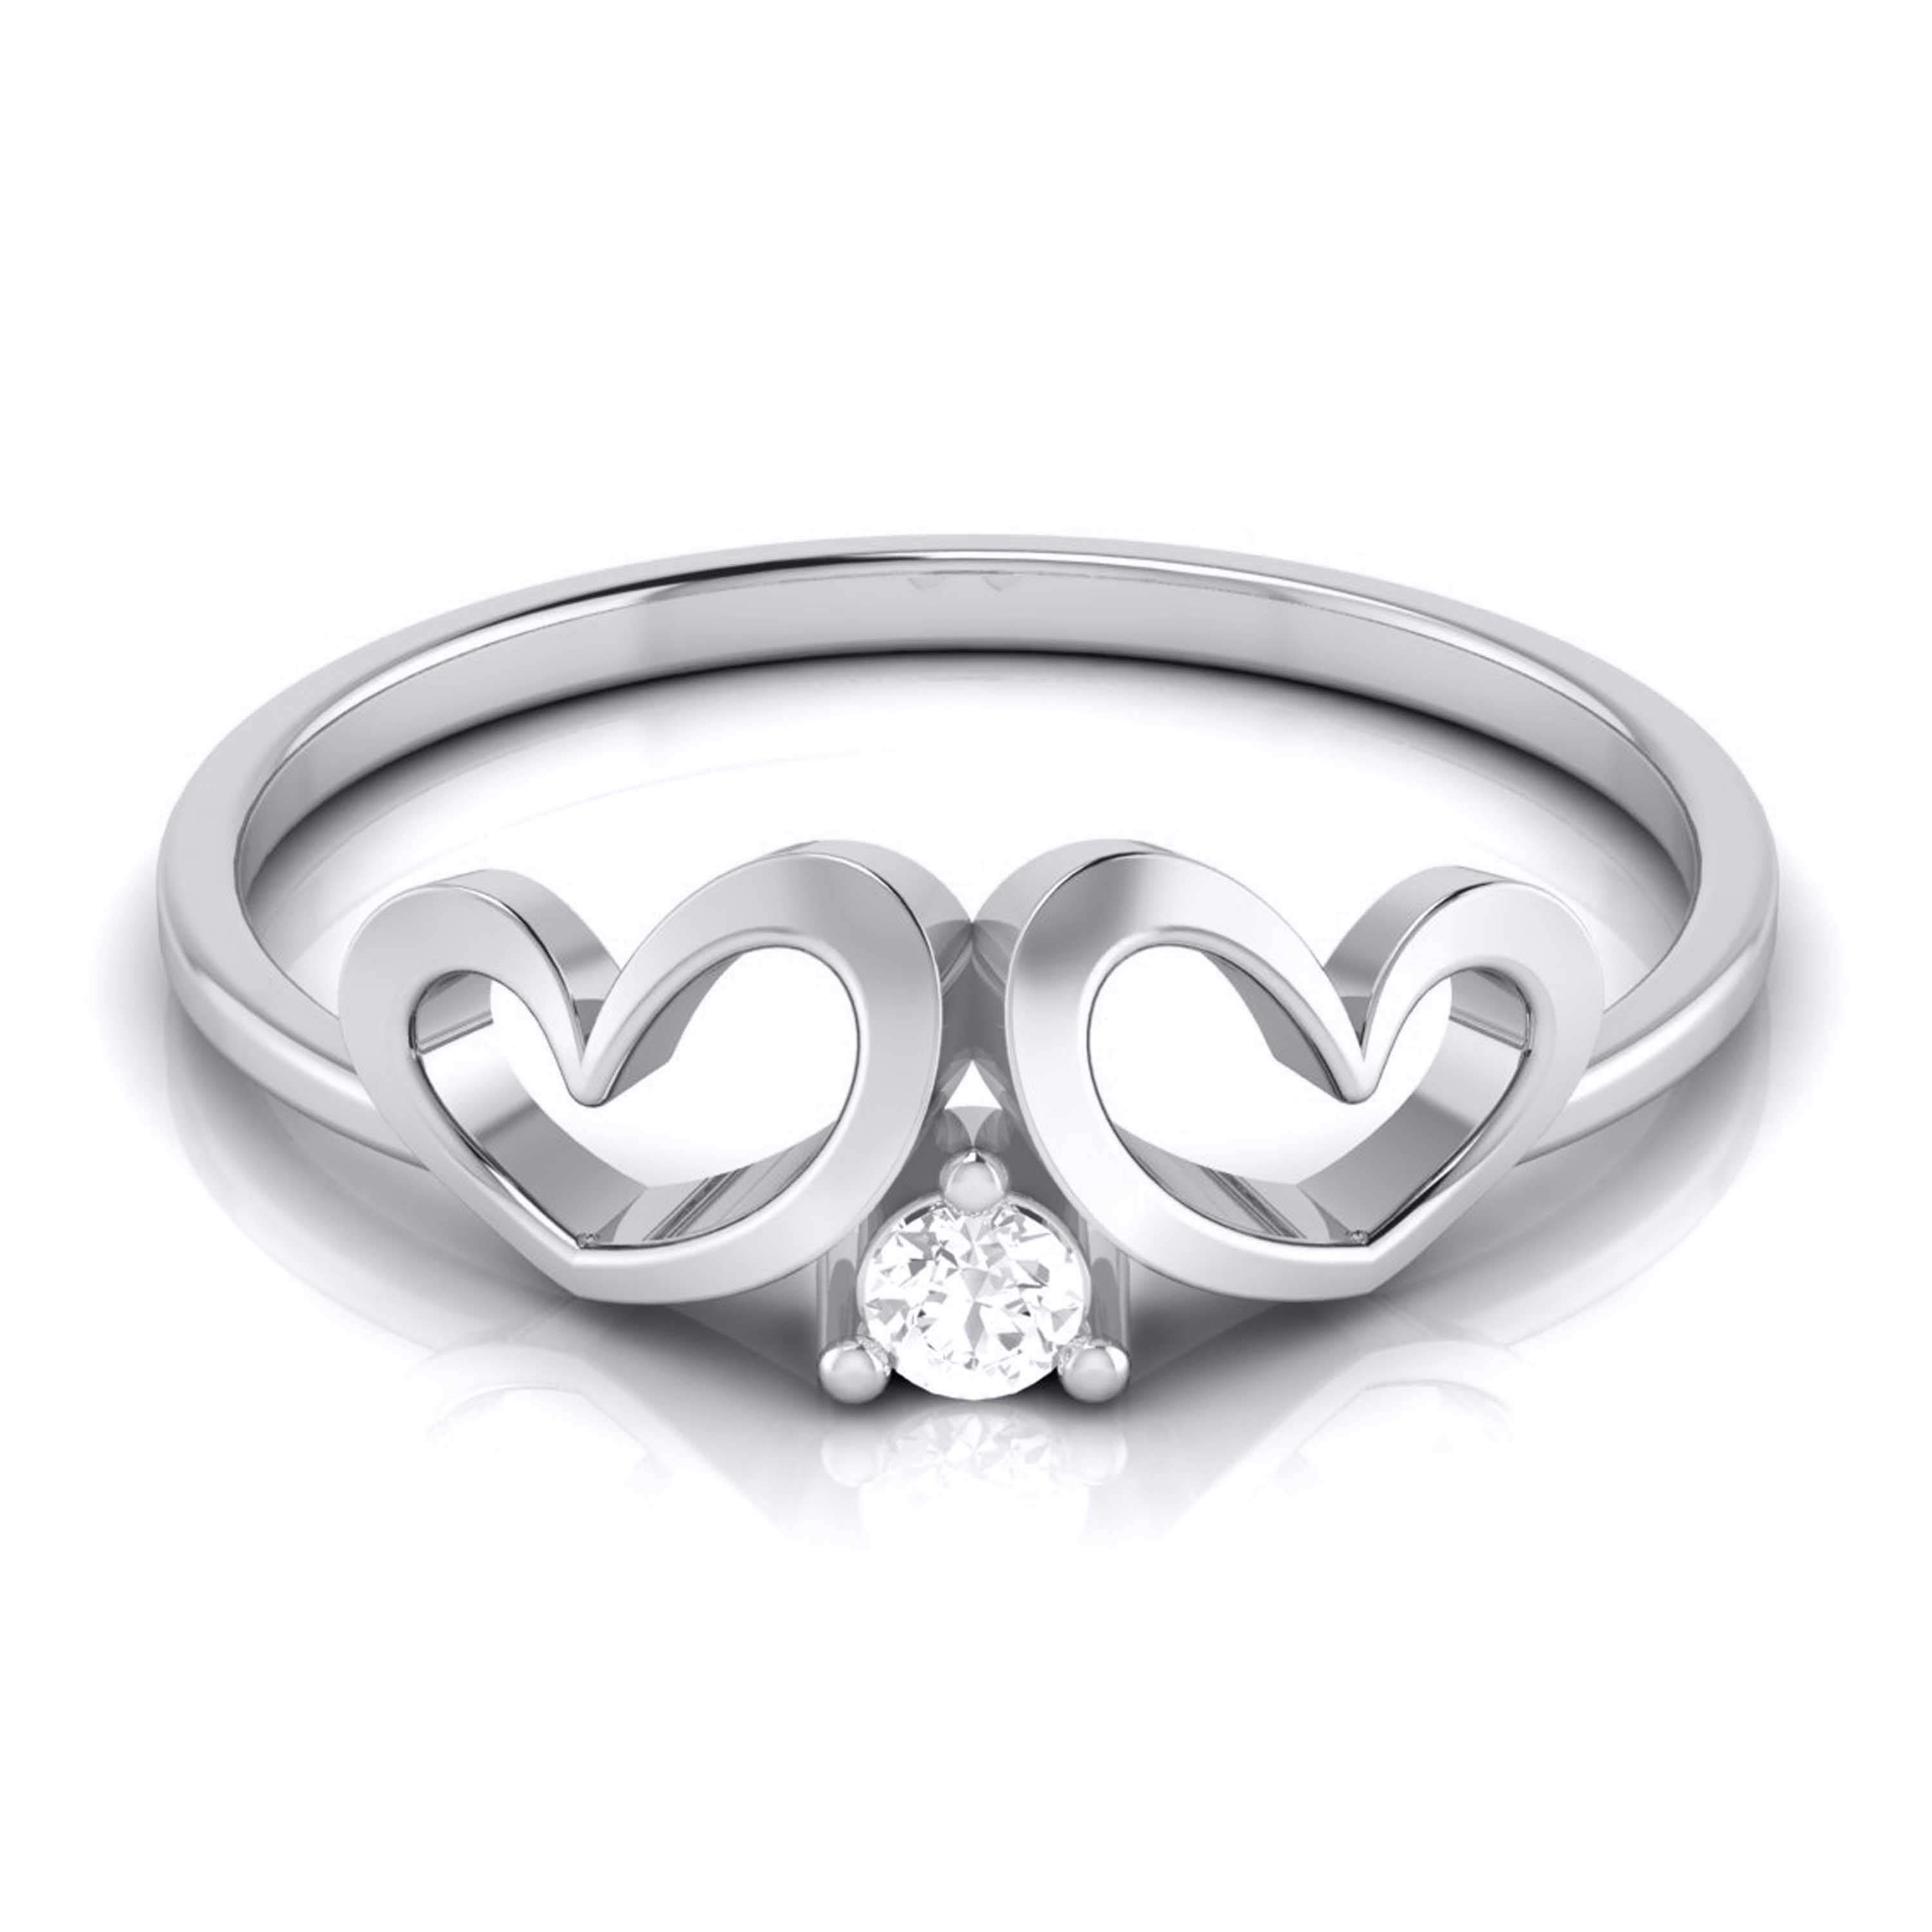 Buy Heart Shaped Diamond Ring | kasturidiamond | Heart shaped diamond ring,  Gold rings fashion, Womens jewelry rings